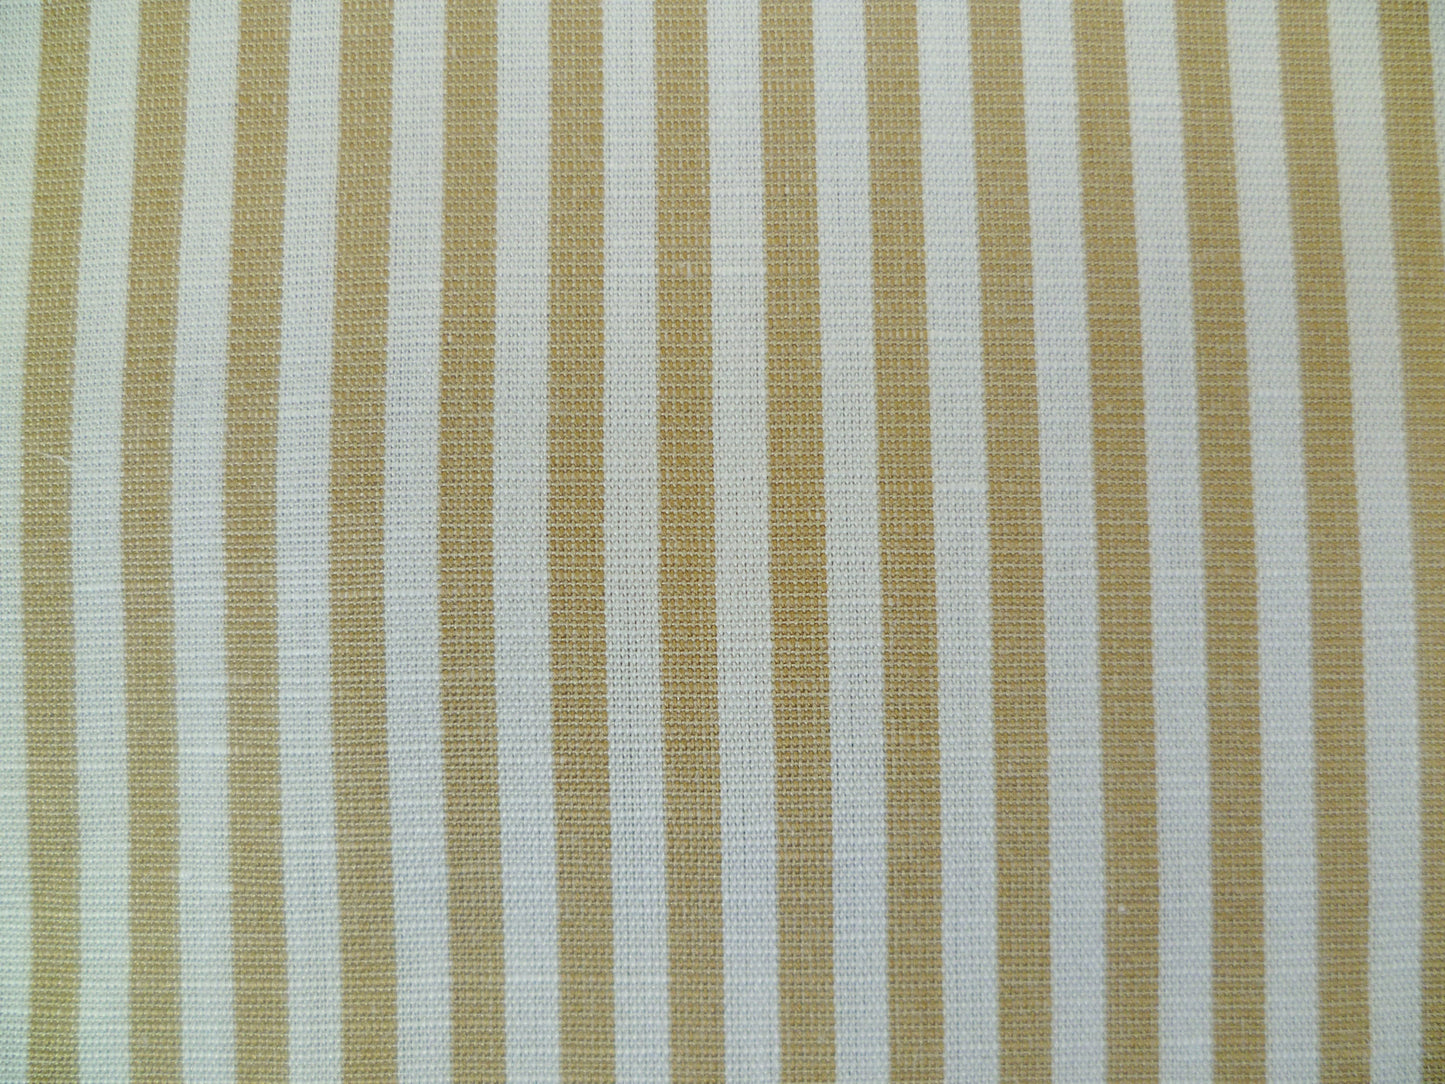 Taupe and White Cotton-Linen Stripe